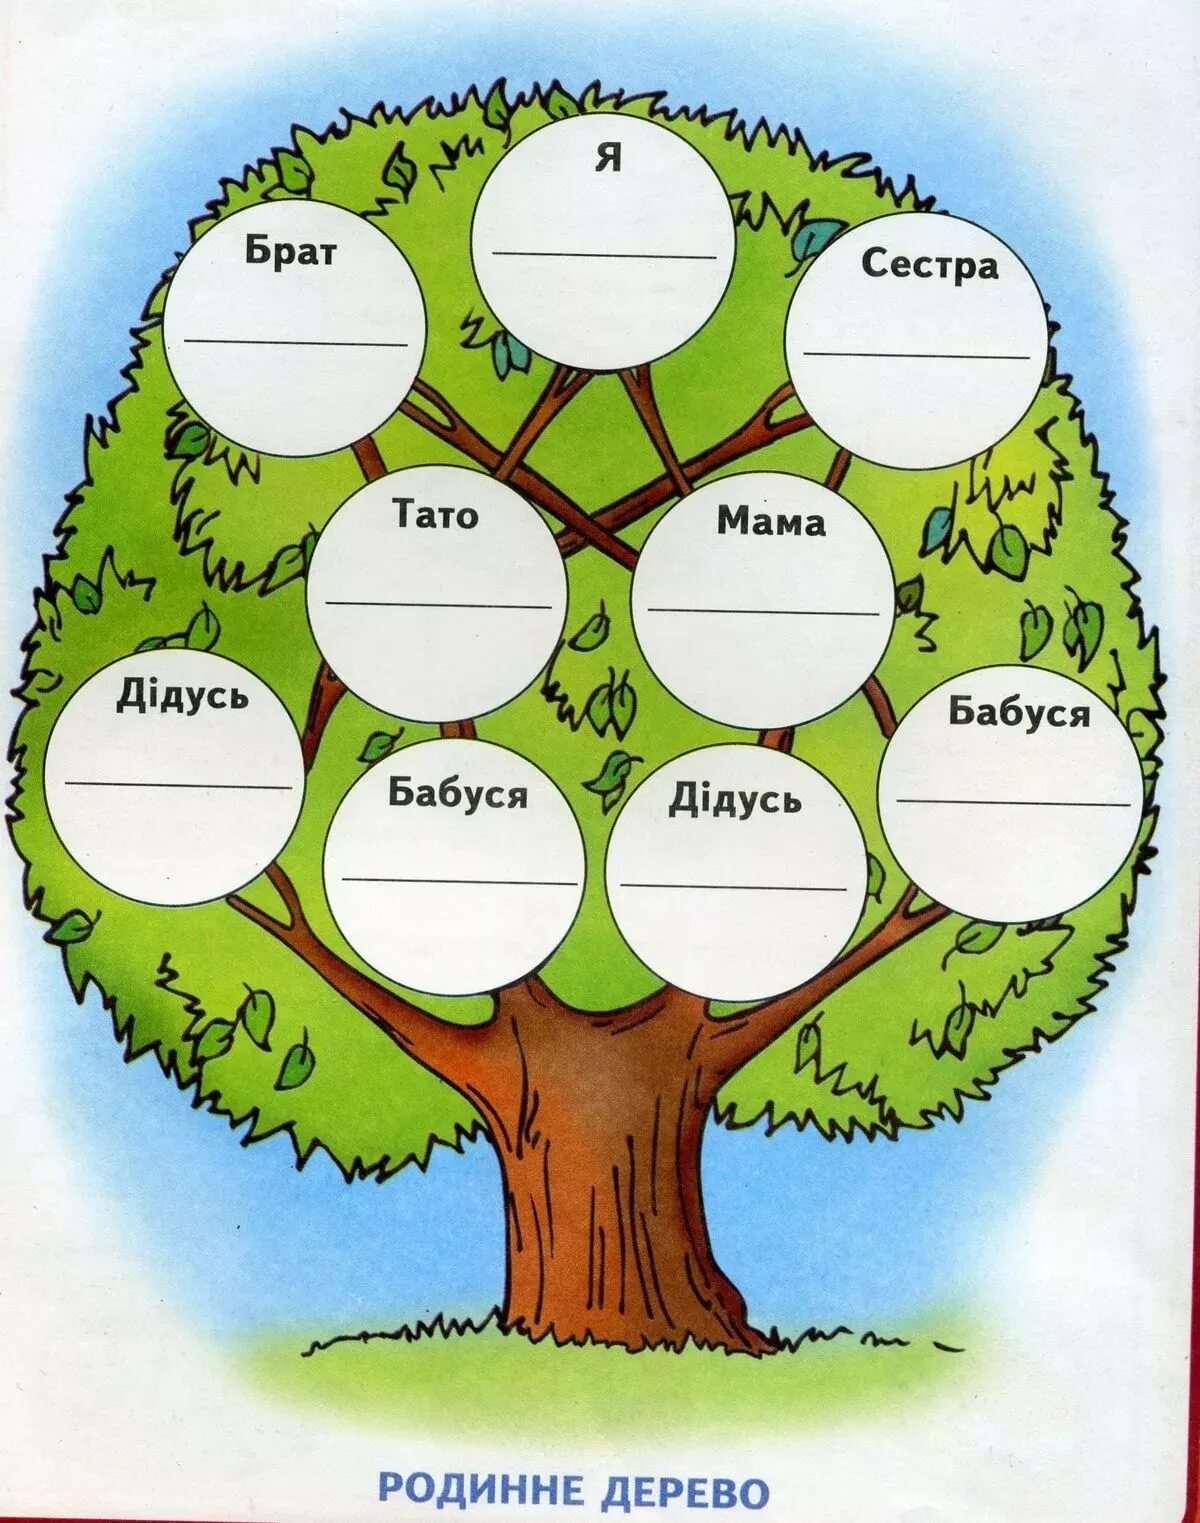 Родословная дерево семьи. Родословная генеалогическое Древо. Дерево жизни родословная. Родословная дерево схема. Пример генеалогического древа семьи